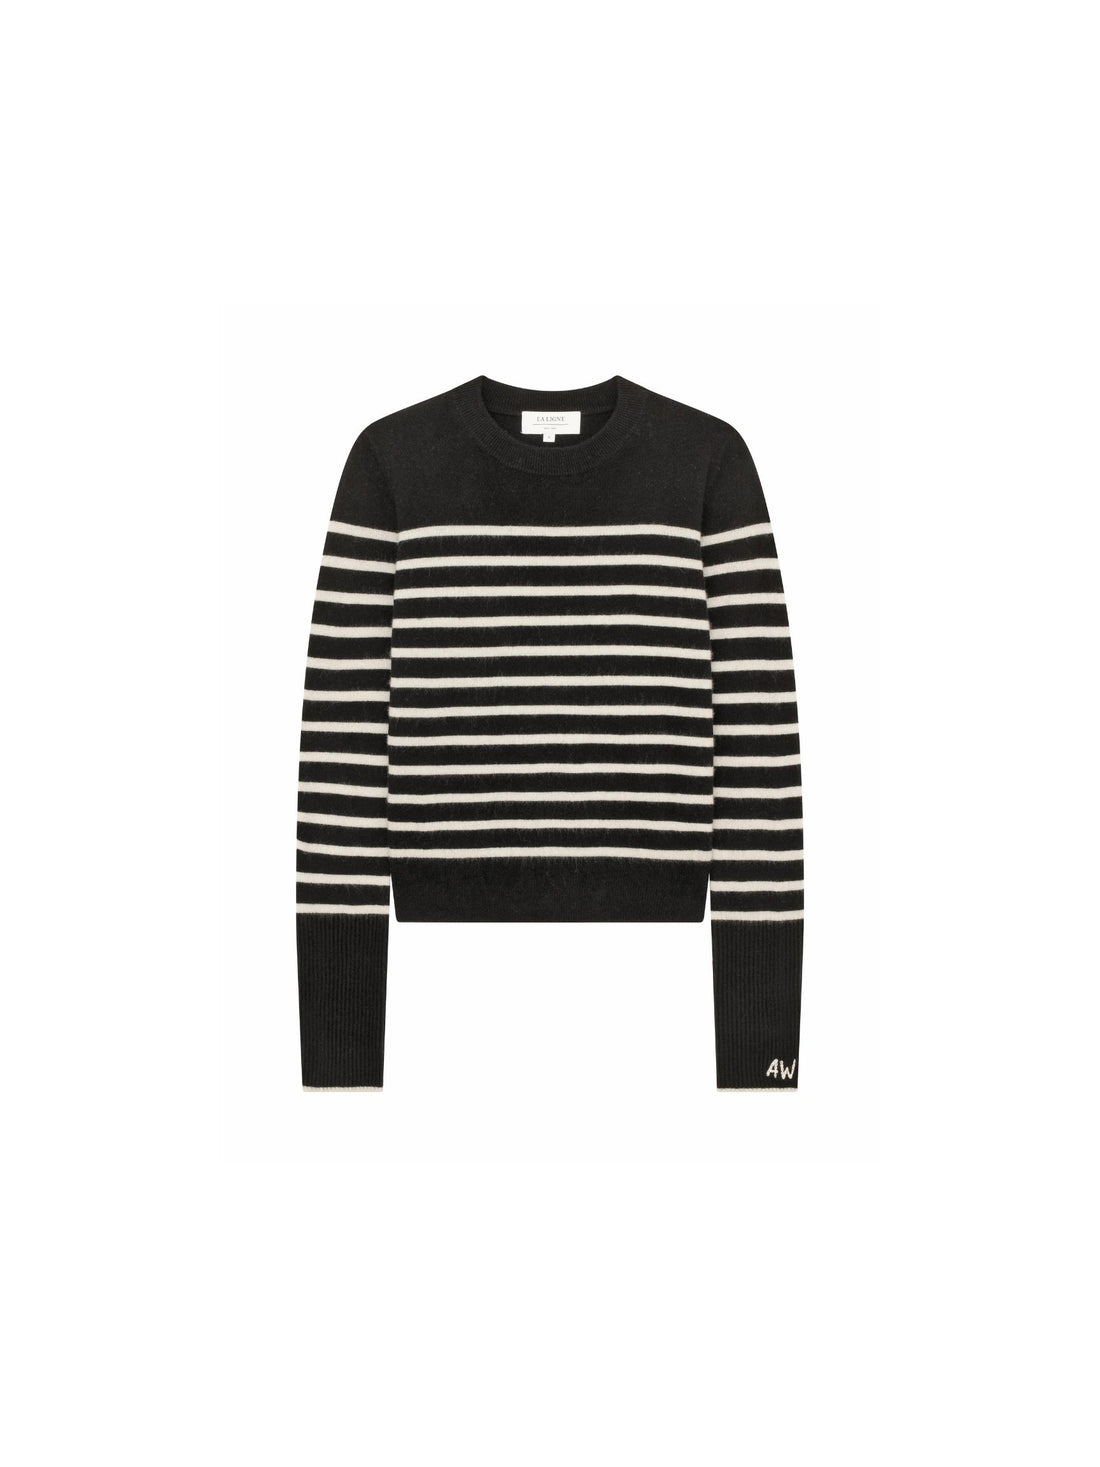 La Ligne Lean Lines Striped Sweater- Size Medium